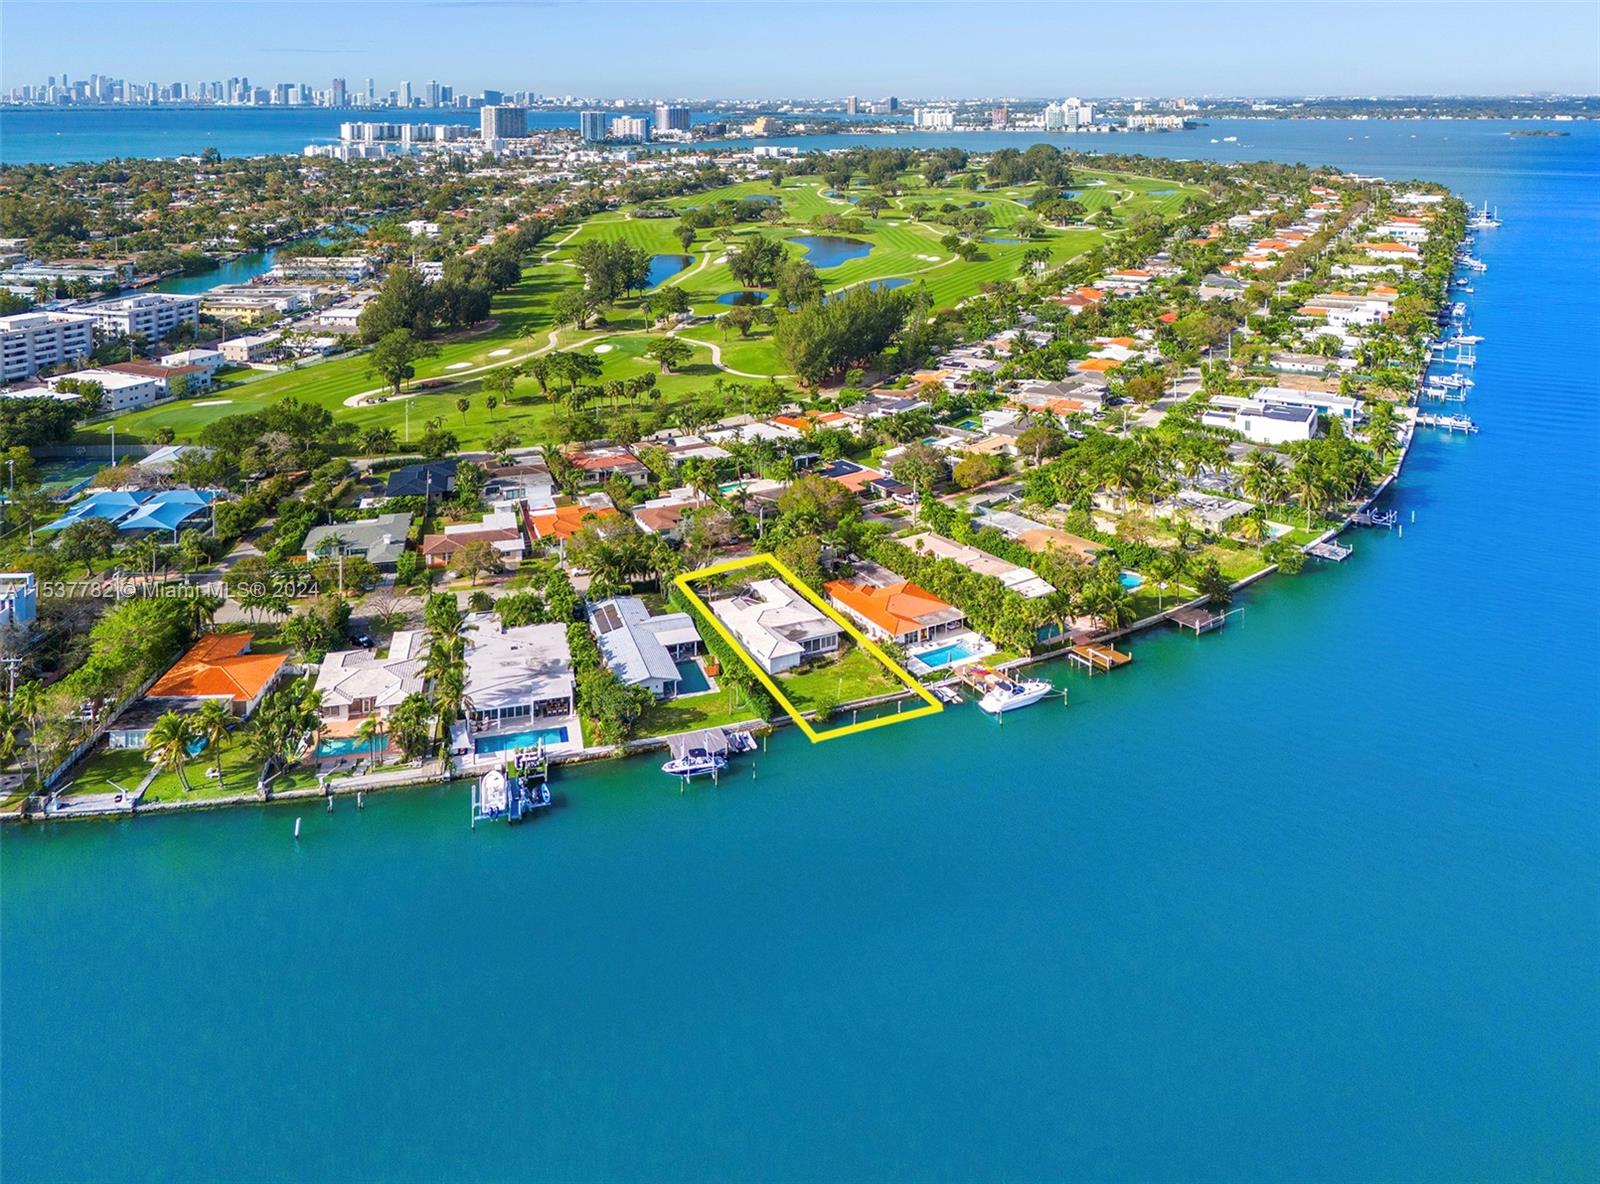 Property for Sale at 235 N Shore Dr, Miami Beach, Miami-Dade County, Florida - Bedrooms: 3 
Bathrooms: 2  - $4,490,000